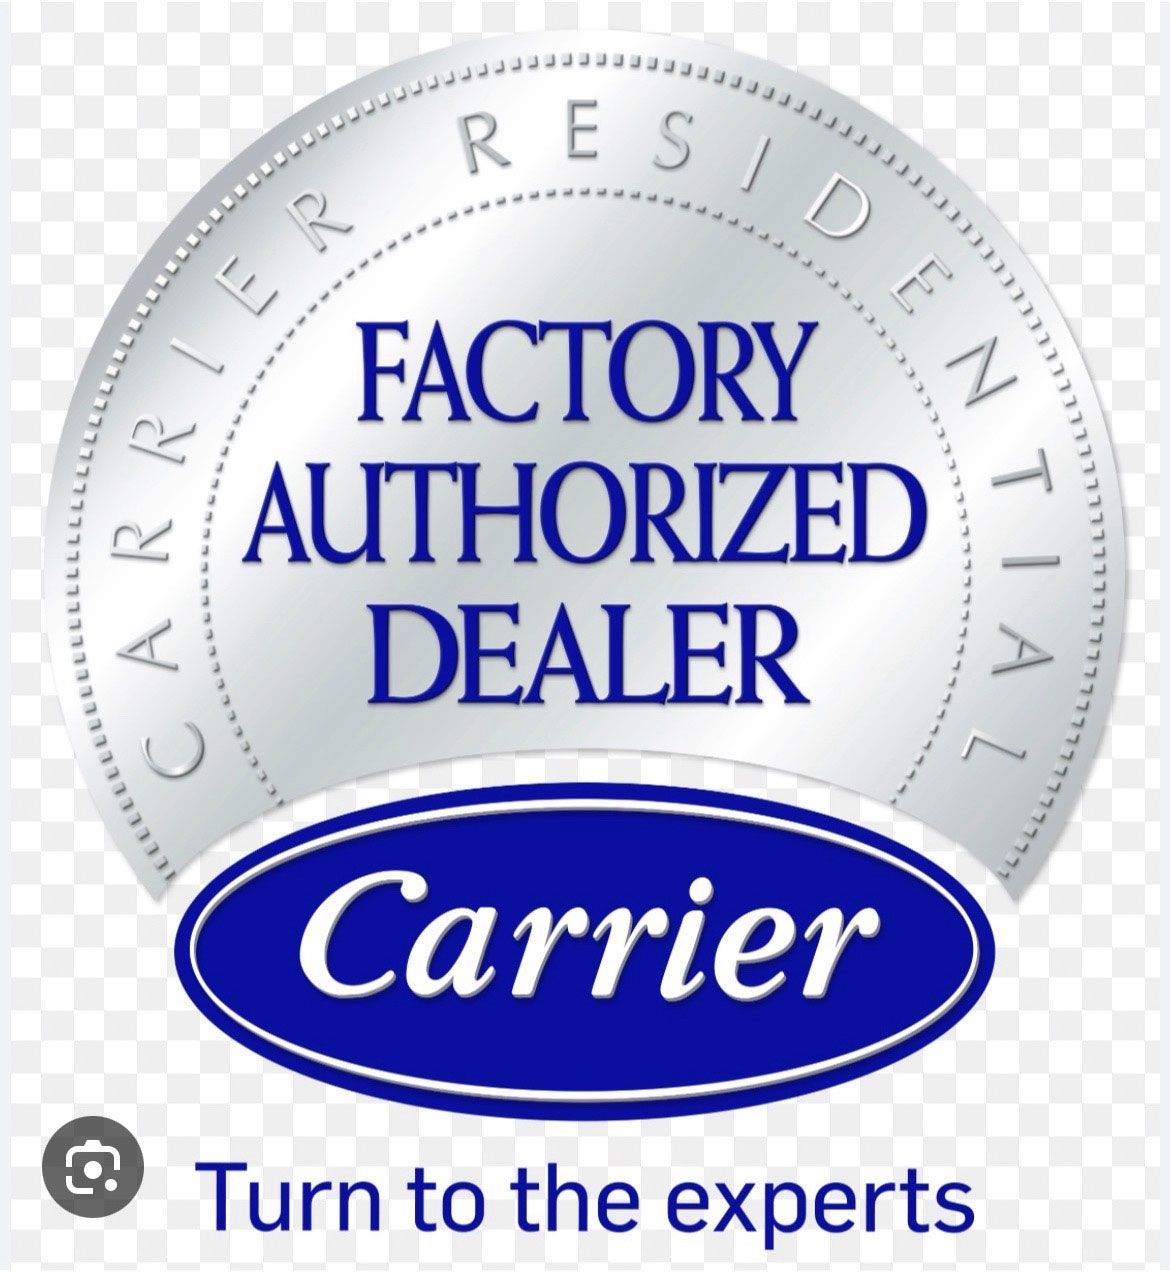 Carrier - Factory Authorized Dealer